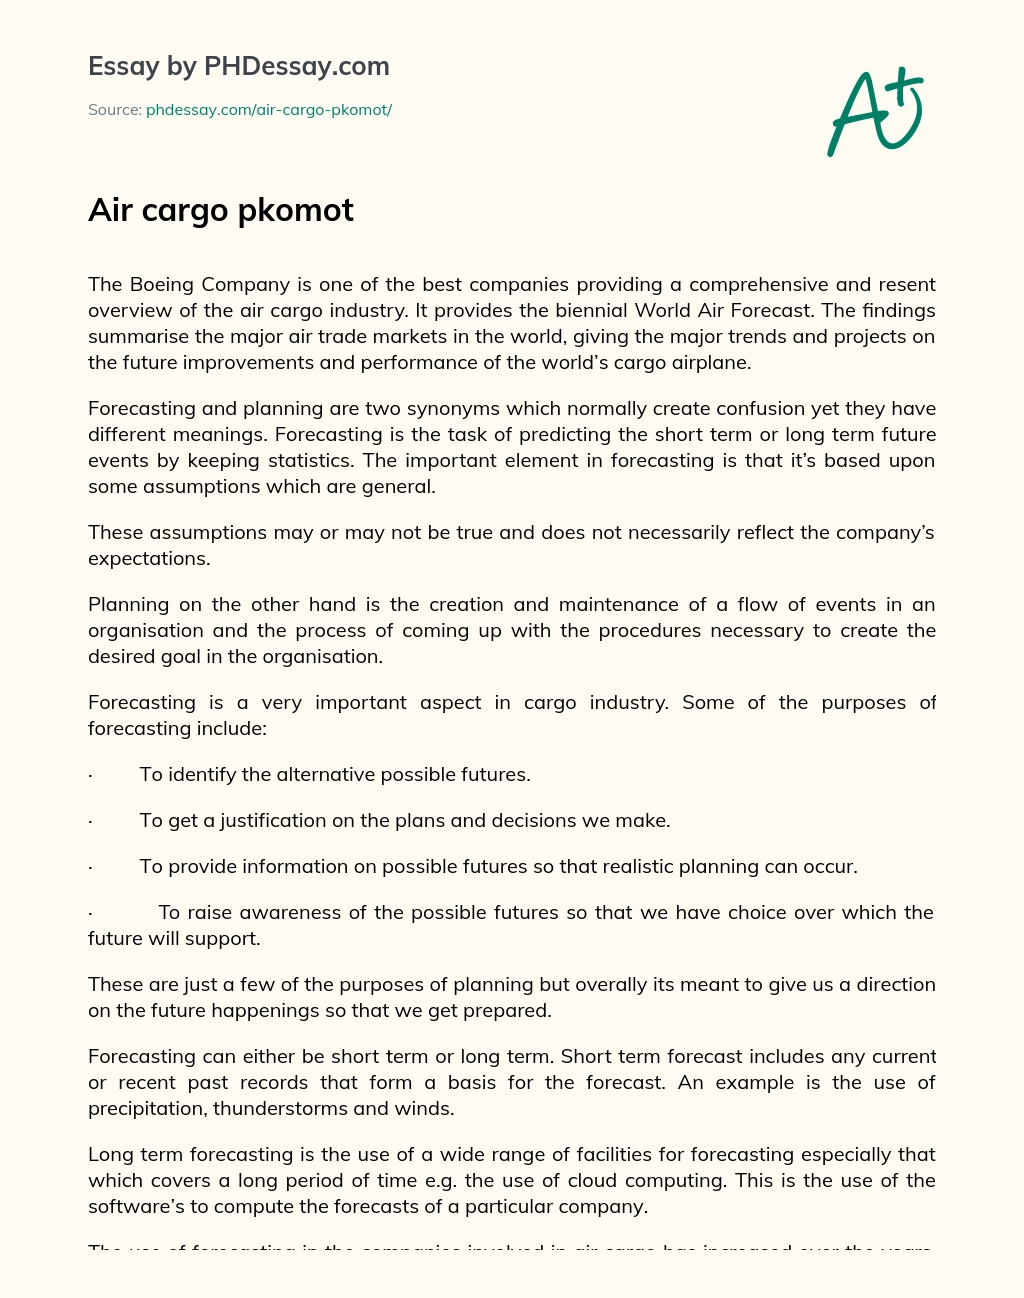 Air cargo pkomot essay